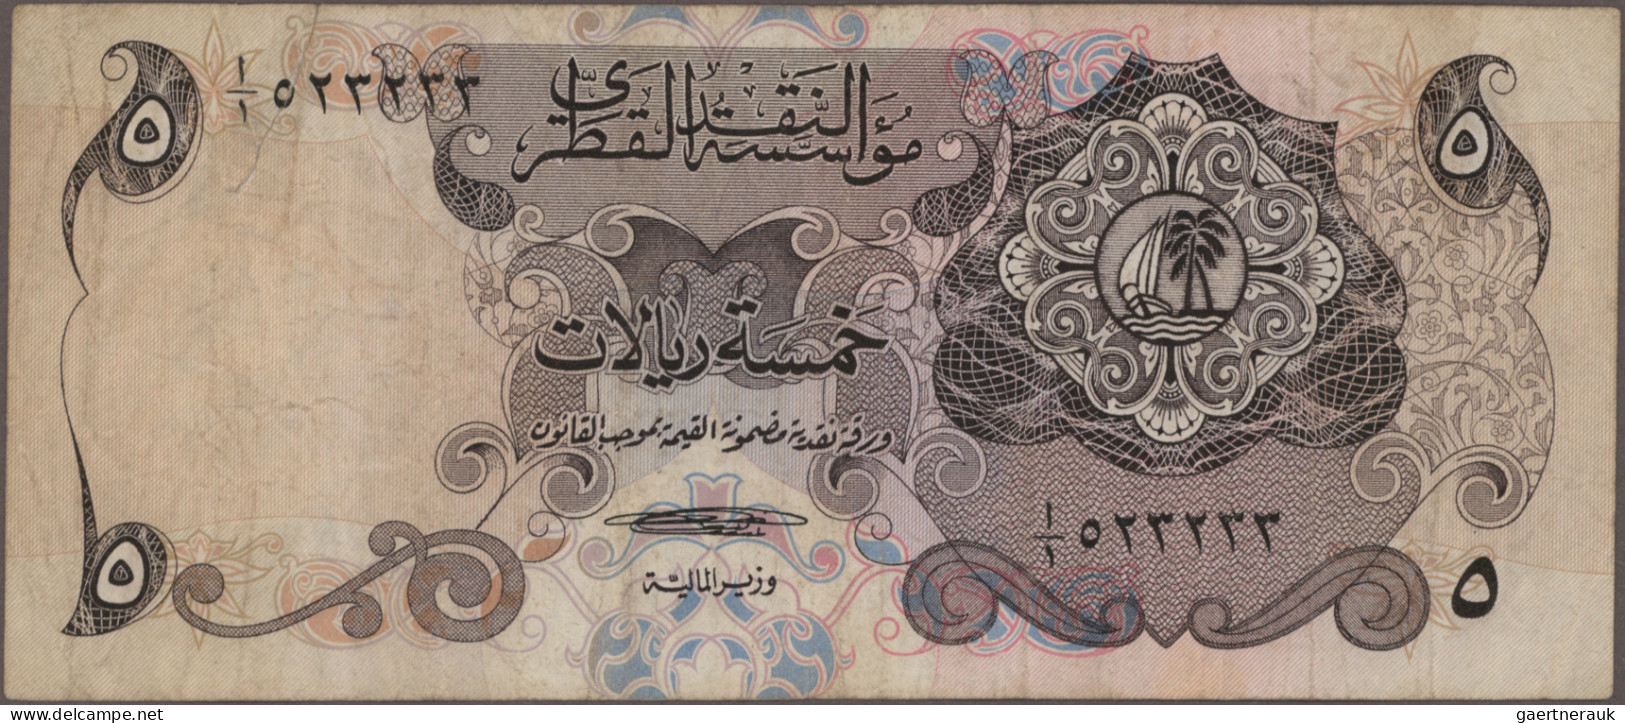 Quatar: The Qatar Monetary Agency And Qatar Central Bank, Lot With 14 Banknotes, - Qatar